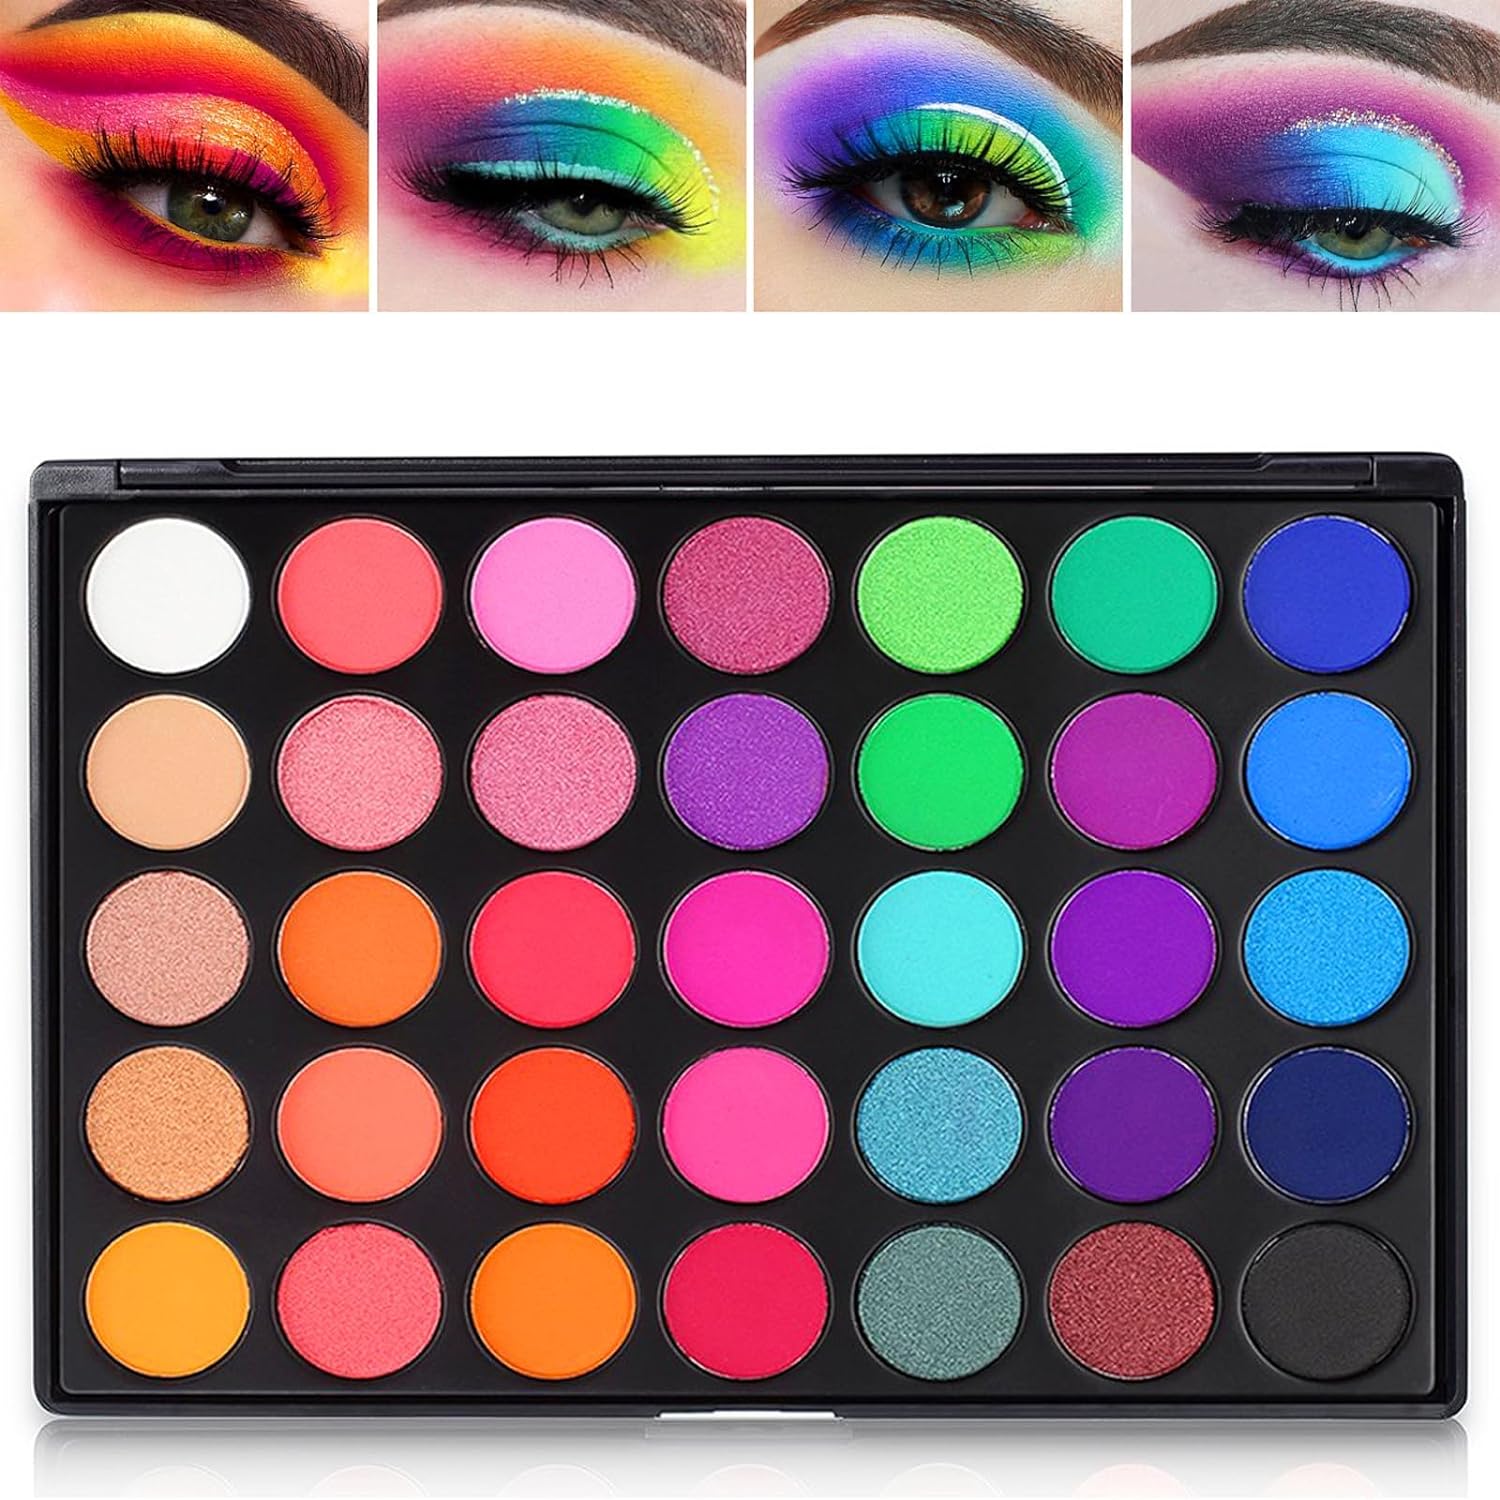 DE'LANCI Rainbow Eyeshadow Palette, Professional 35 Bright Colors